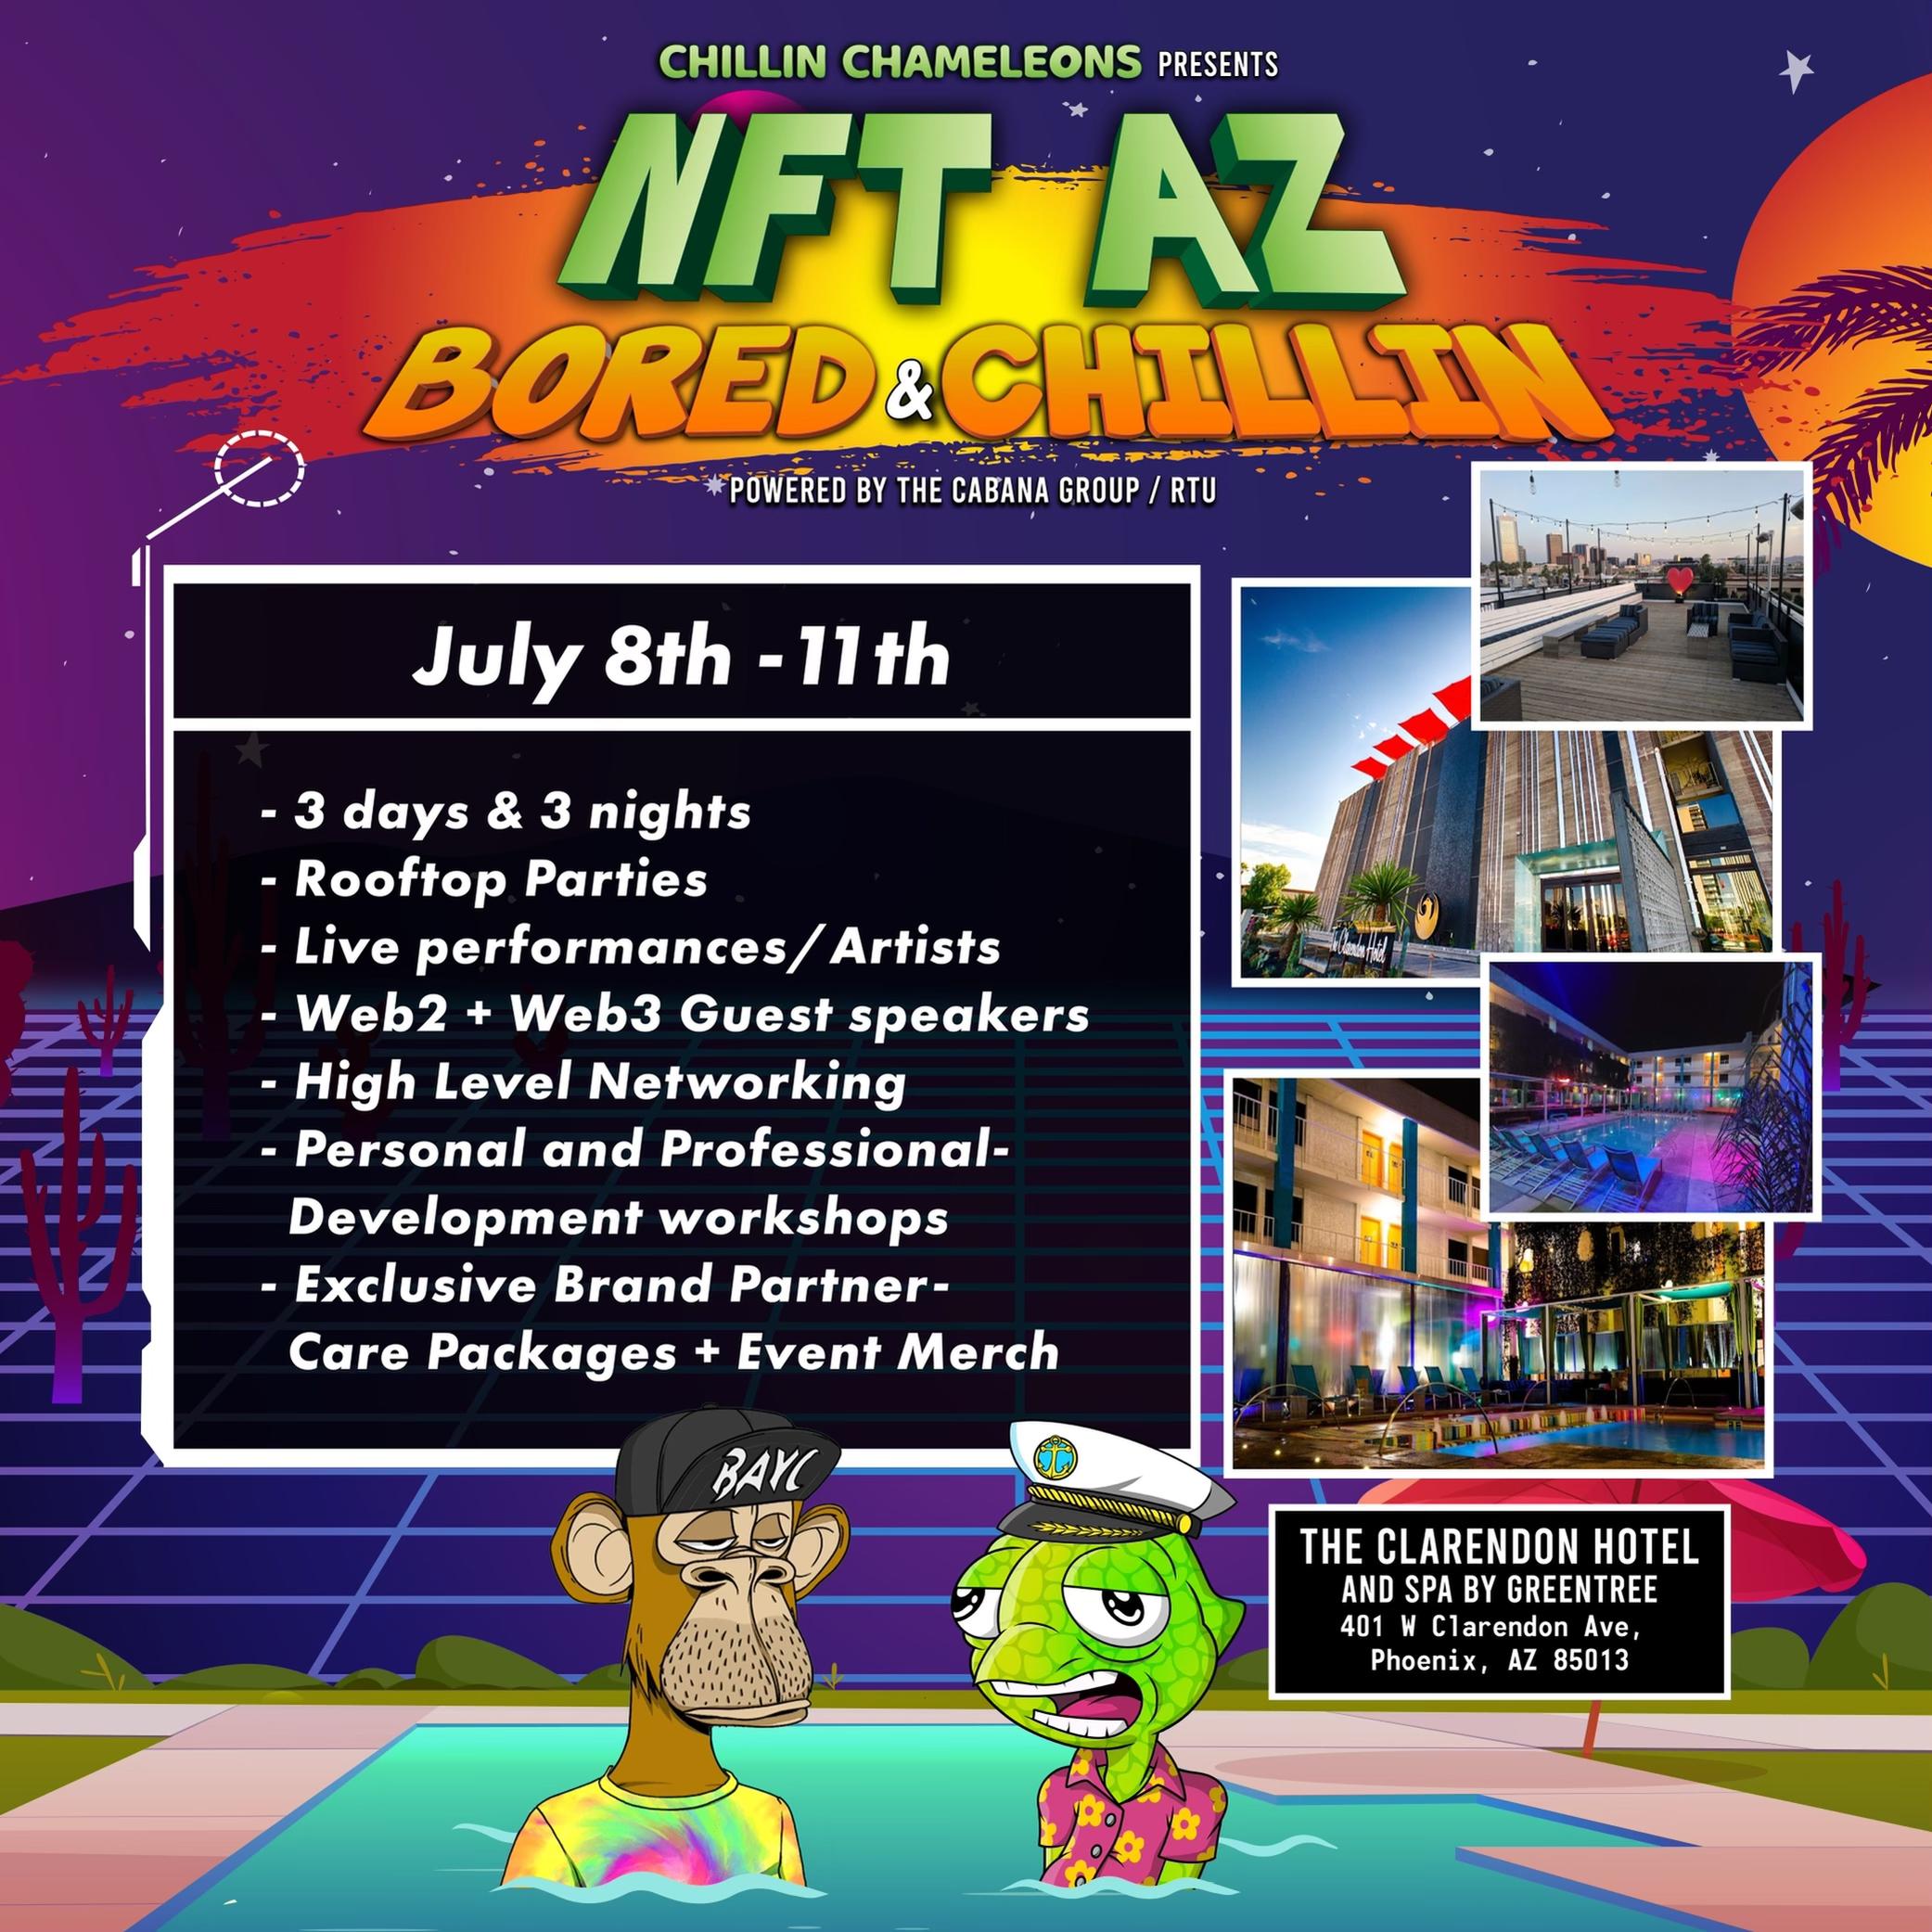 Chillin Chameleons Host NFT AZ, an IRL NFT Event With The Cabana Group And RTU